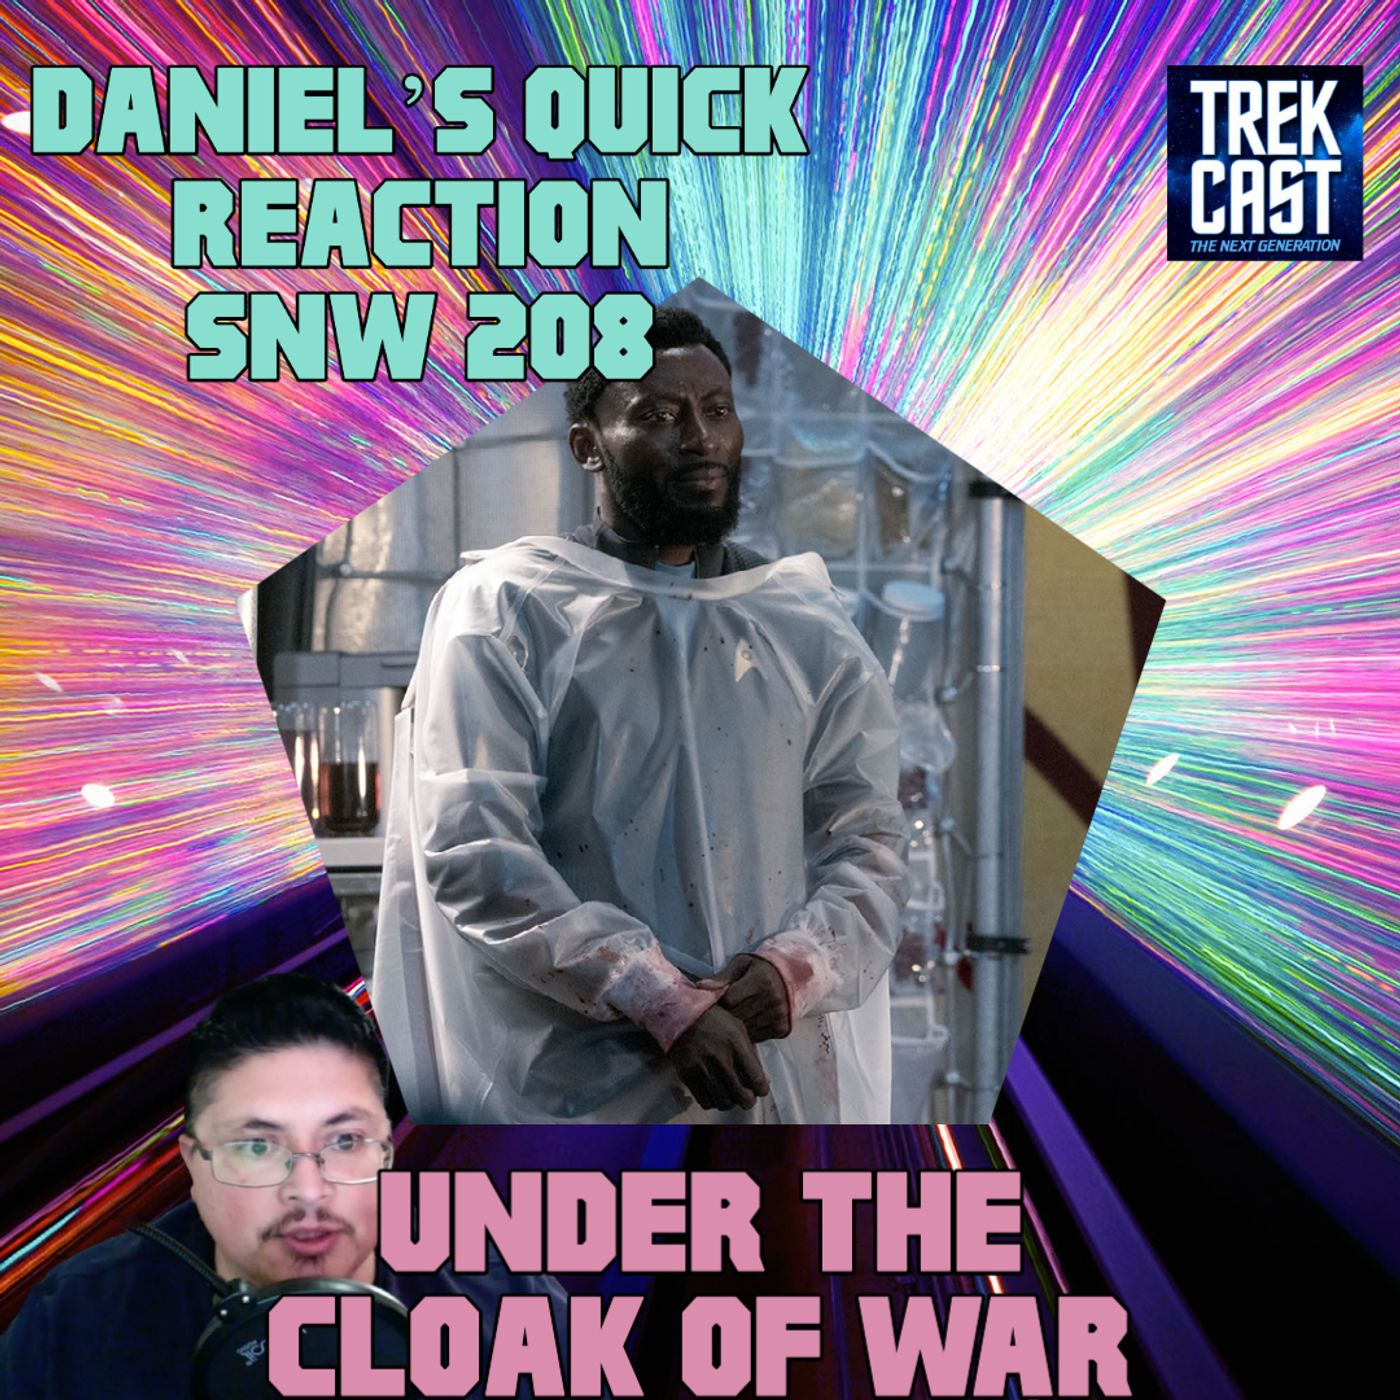 Daniel’s Quick Reaction SNW 208 Under the Cloak of War